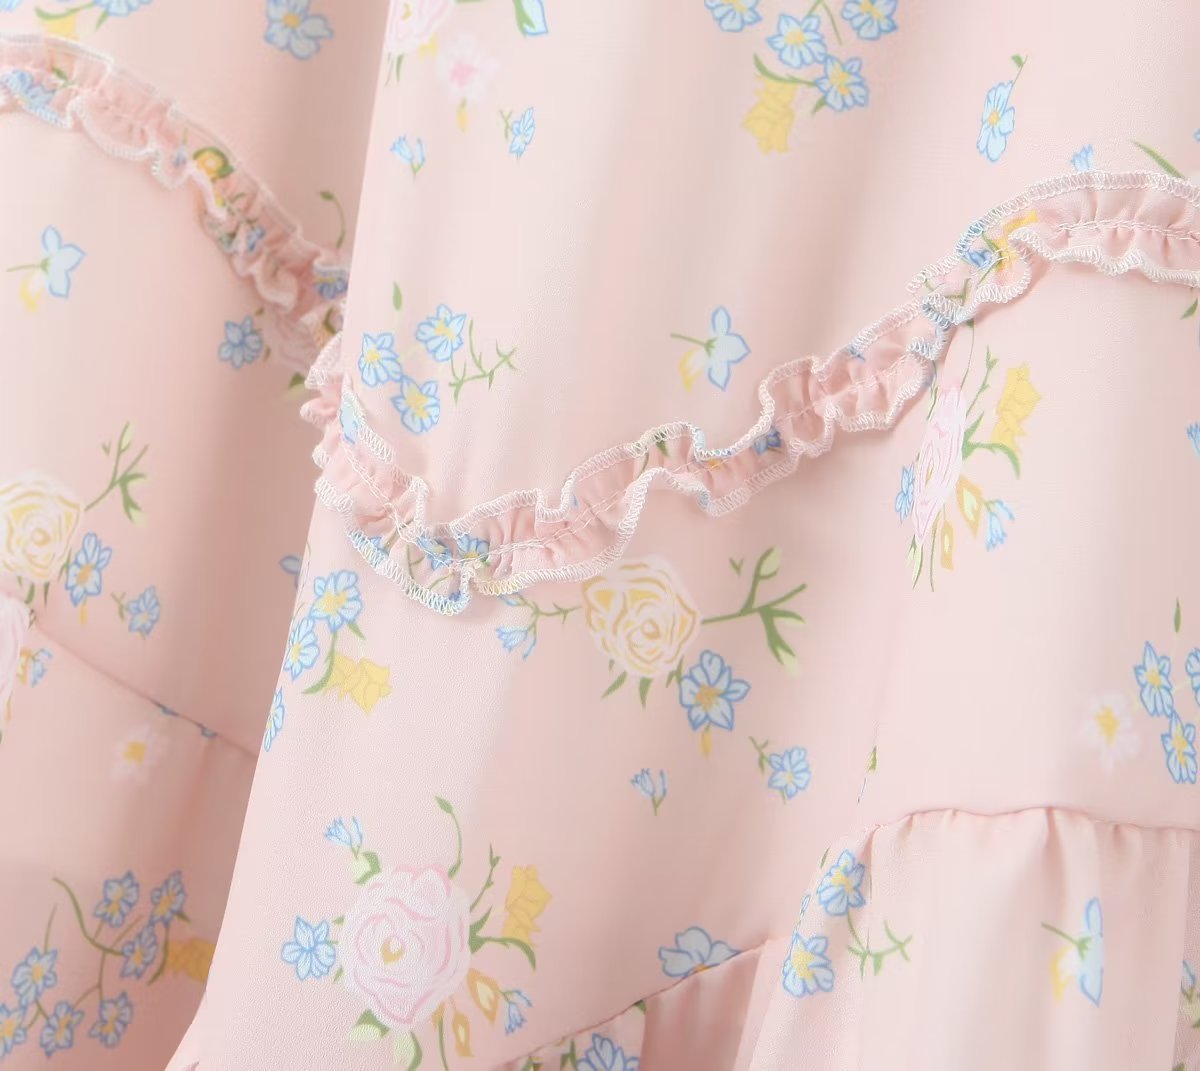 Spring Outfits | Elegant Pink Chiffon Floral Puff Sleeve Princess Dress